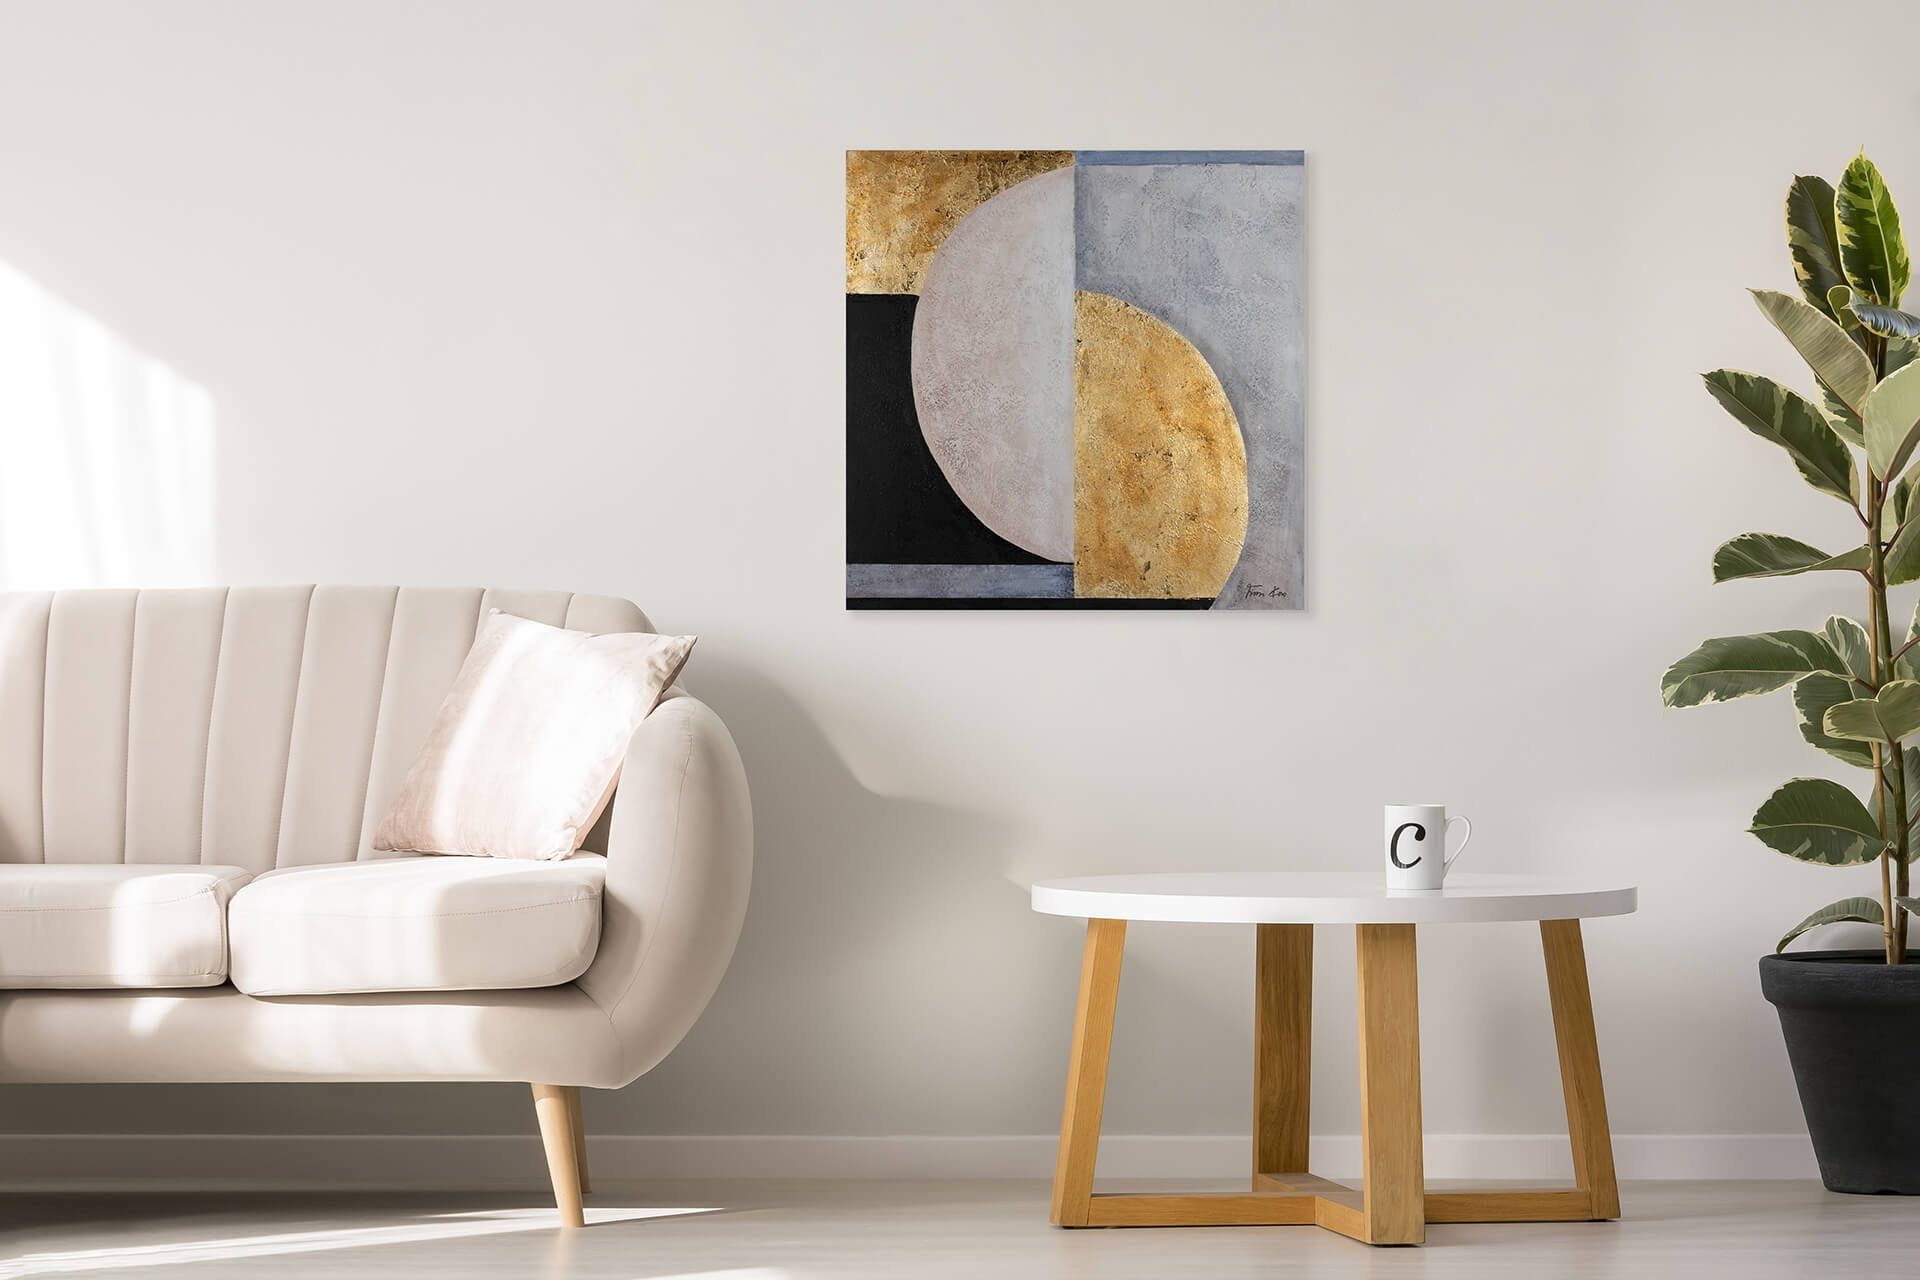 KUNSTLOFT 80x80 100% Moon cm, Phases Wohnzimmer HANDGEMALT Leinwandbild Gemälde Wandbild